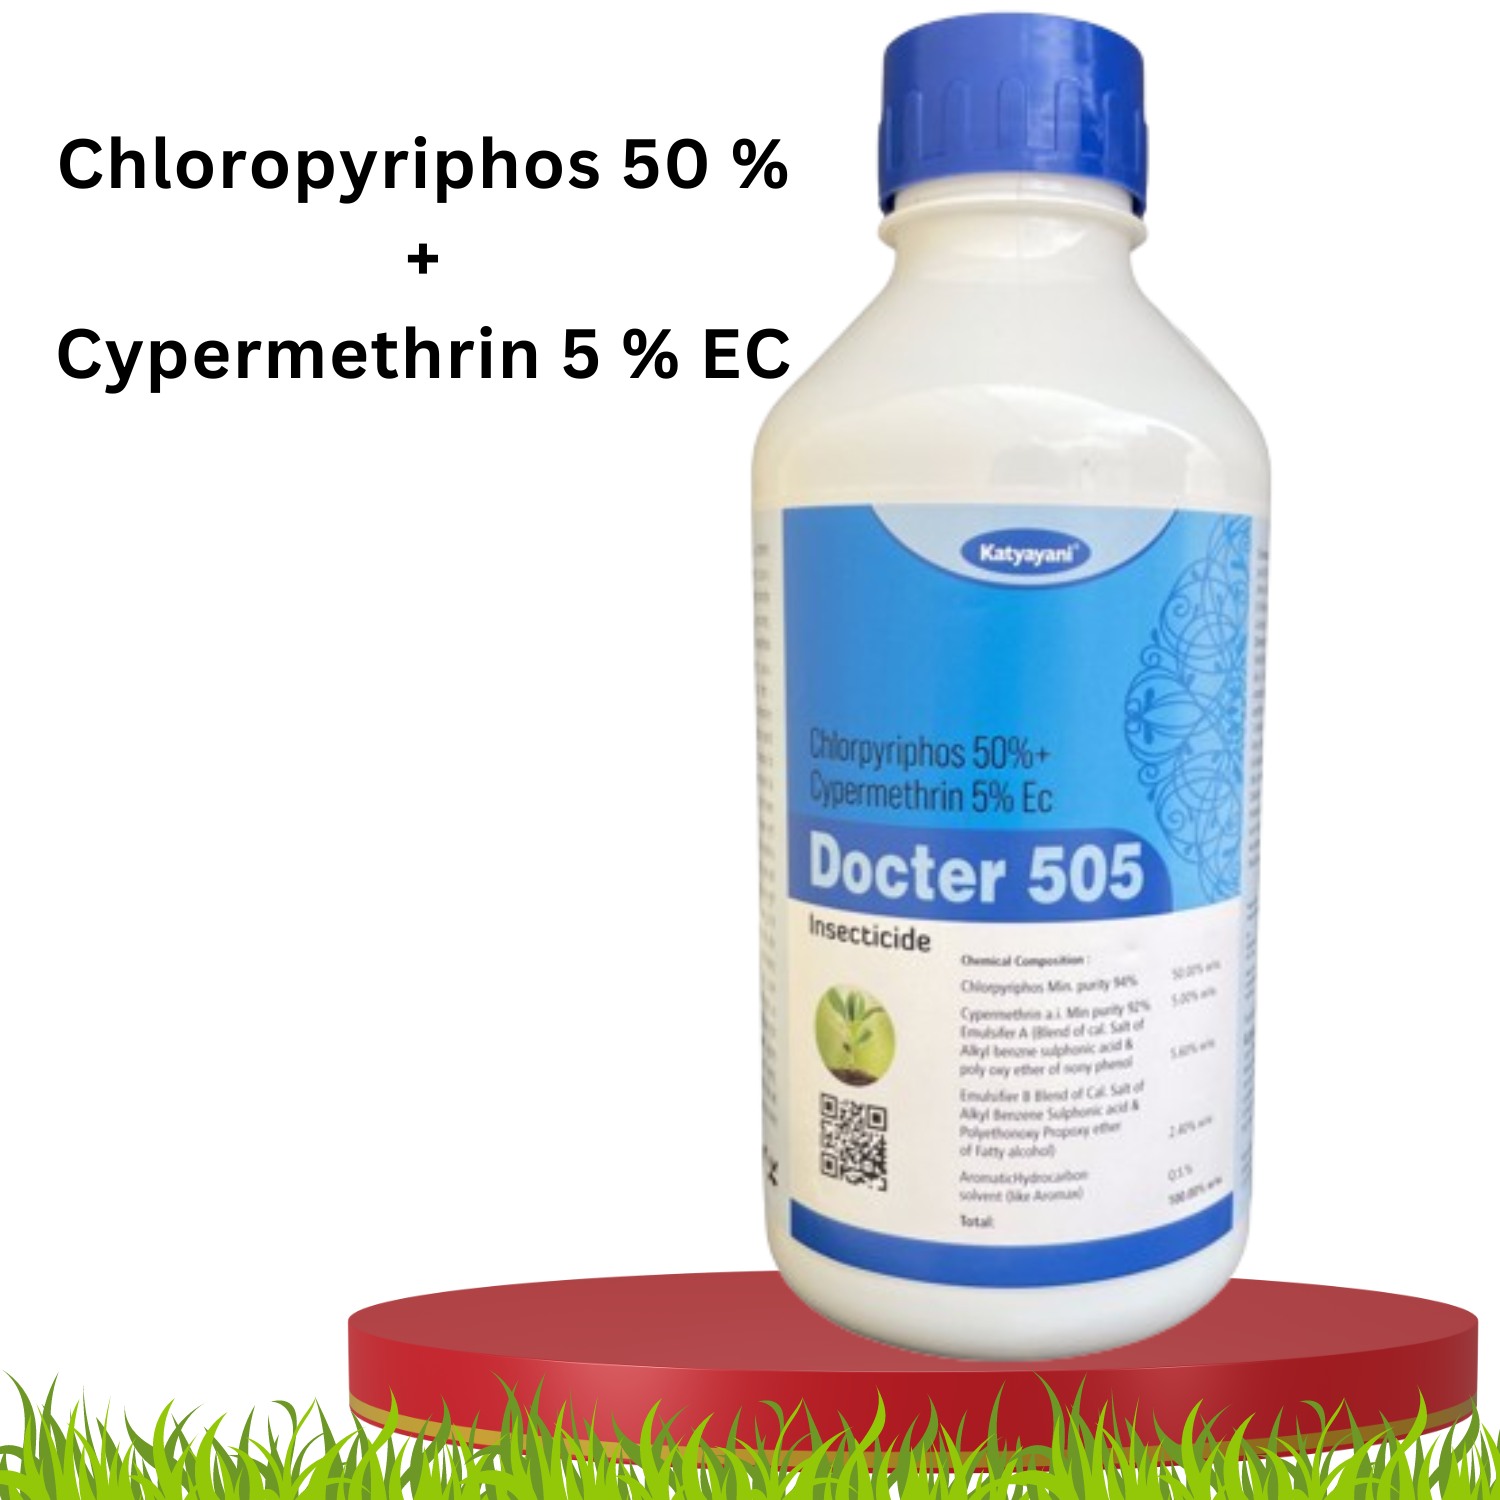 Chlorpyriphos 50 % + cypermethrin 5 % ec - Docter 505